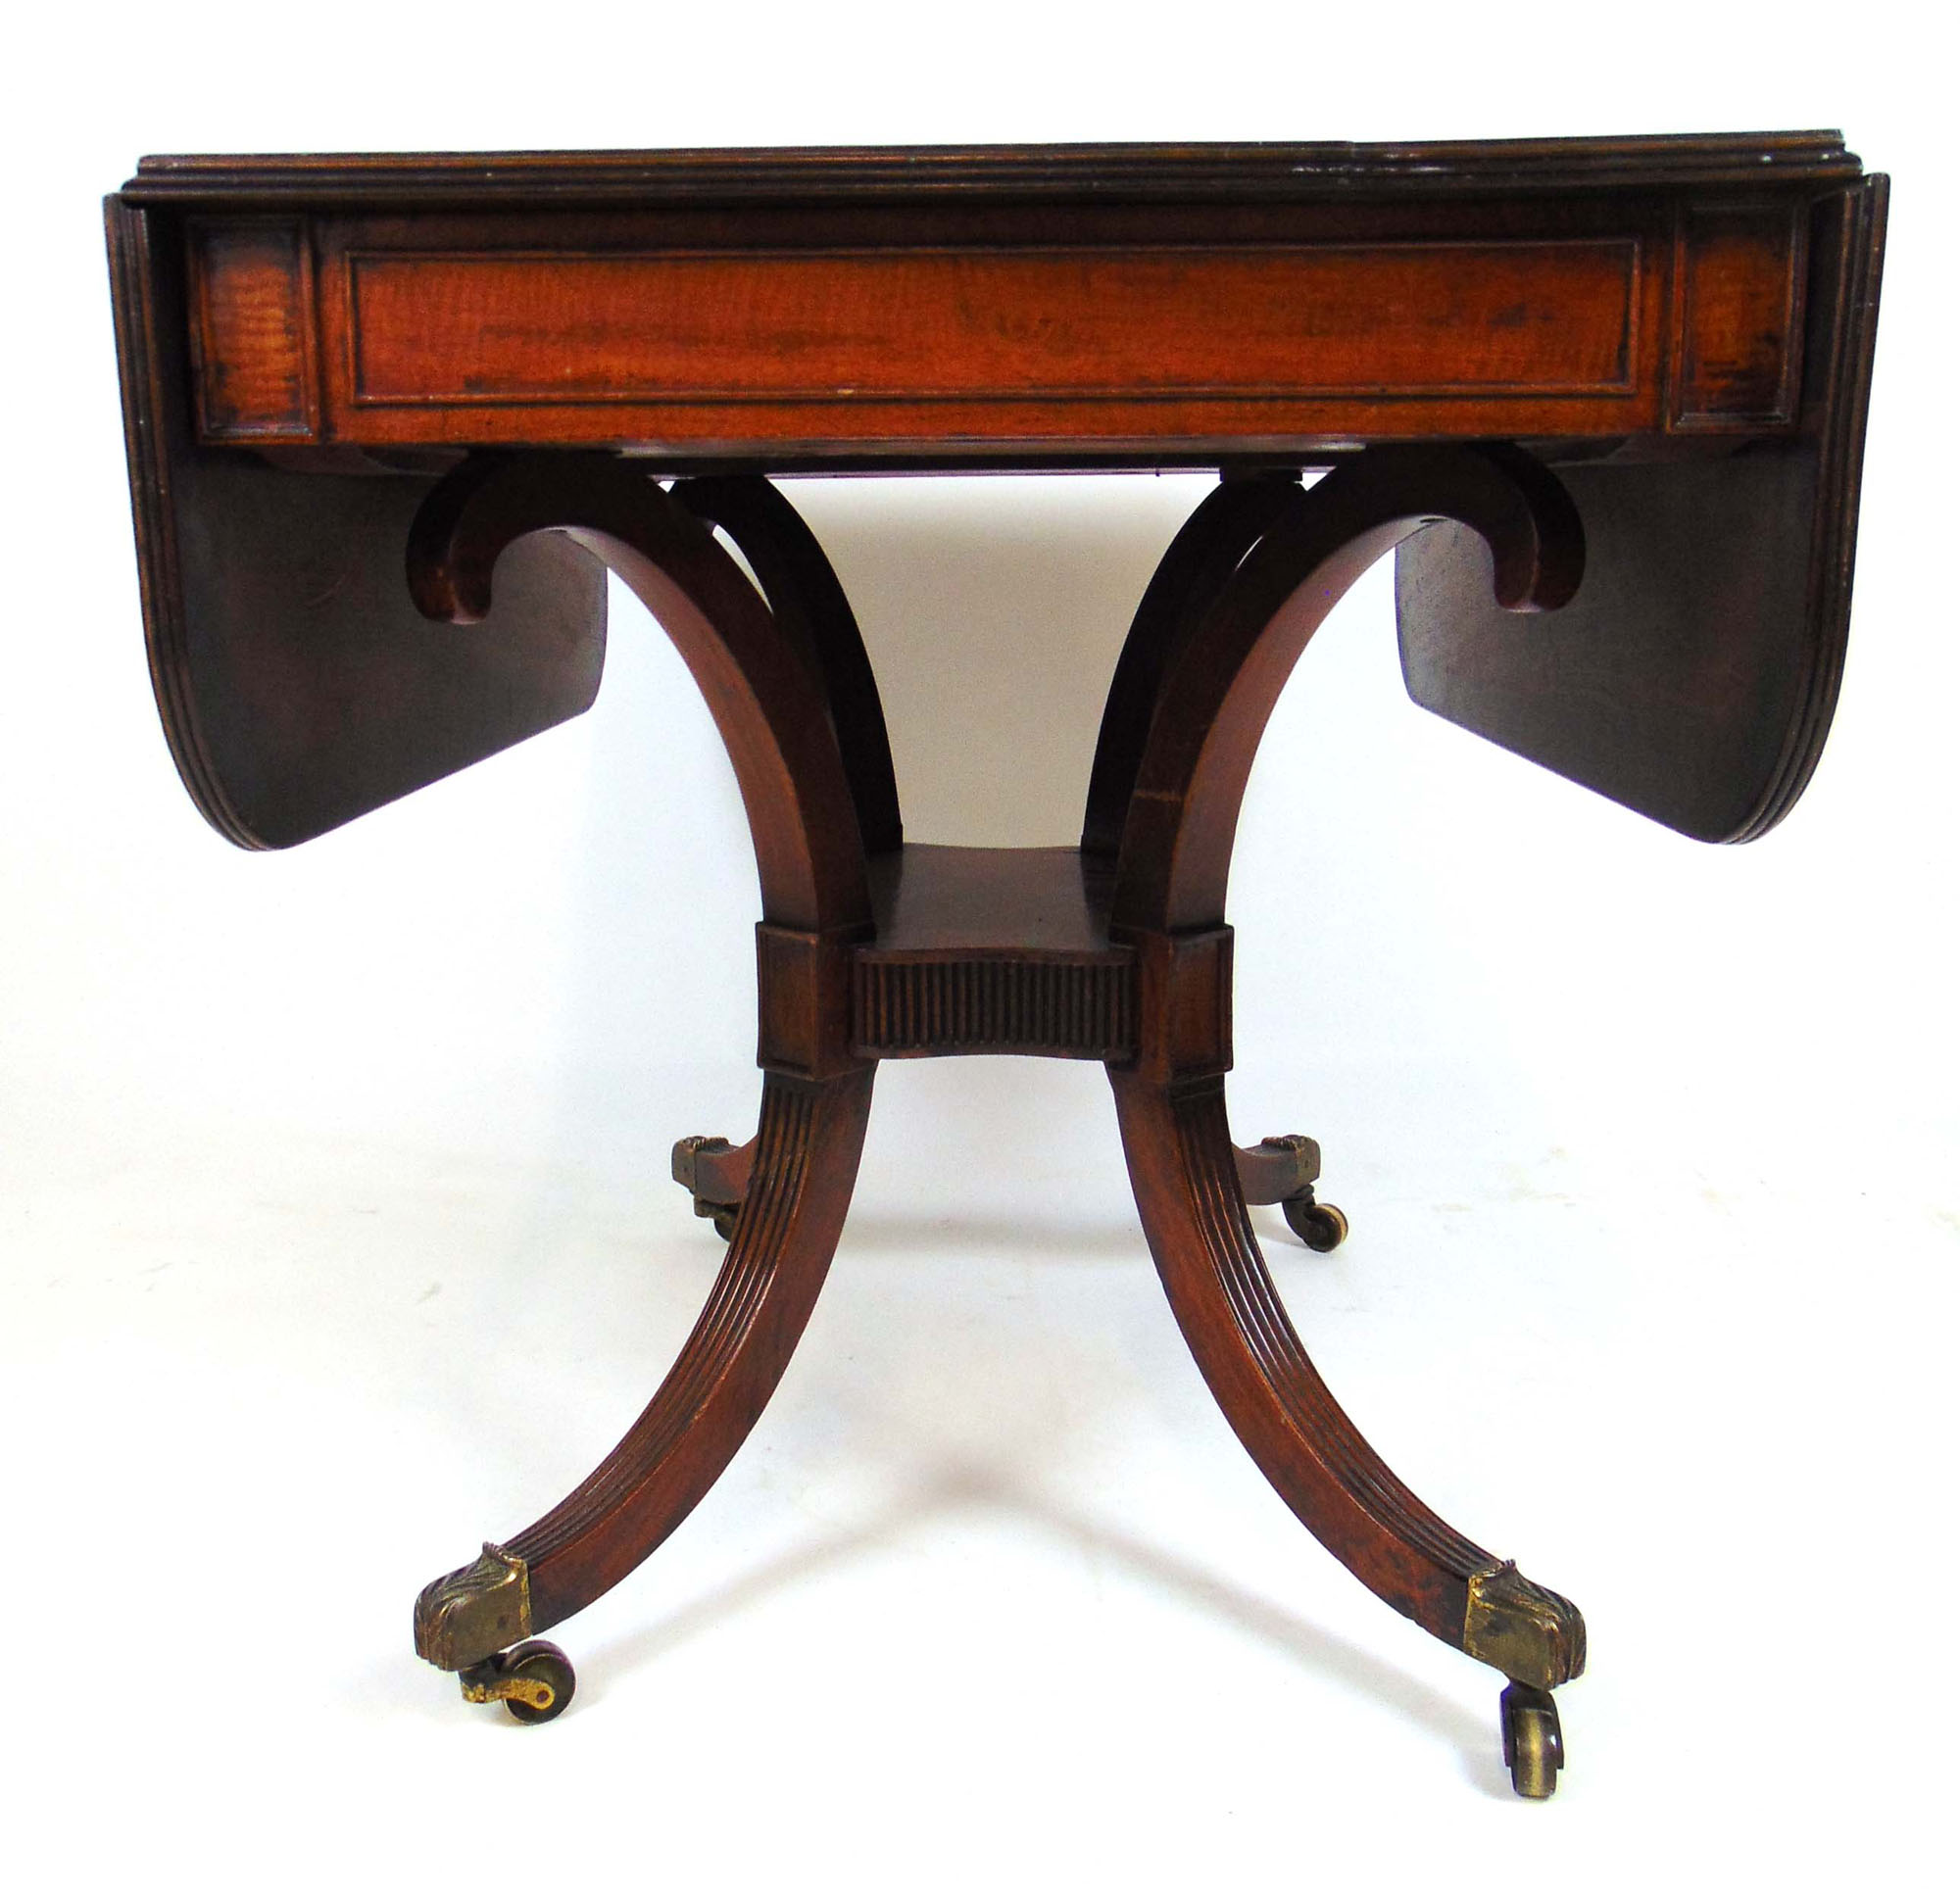 A late 19th century mahogany pembroke table, - Image 2 of 3